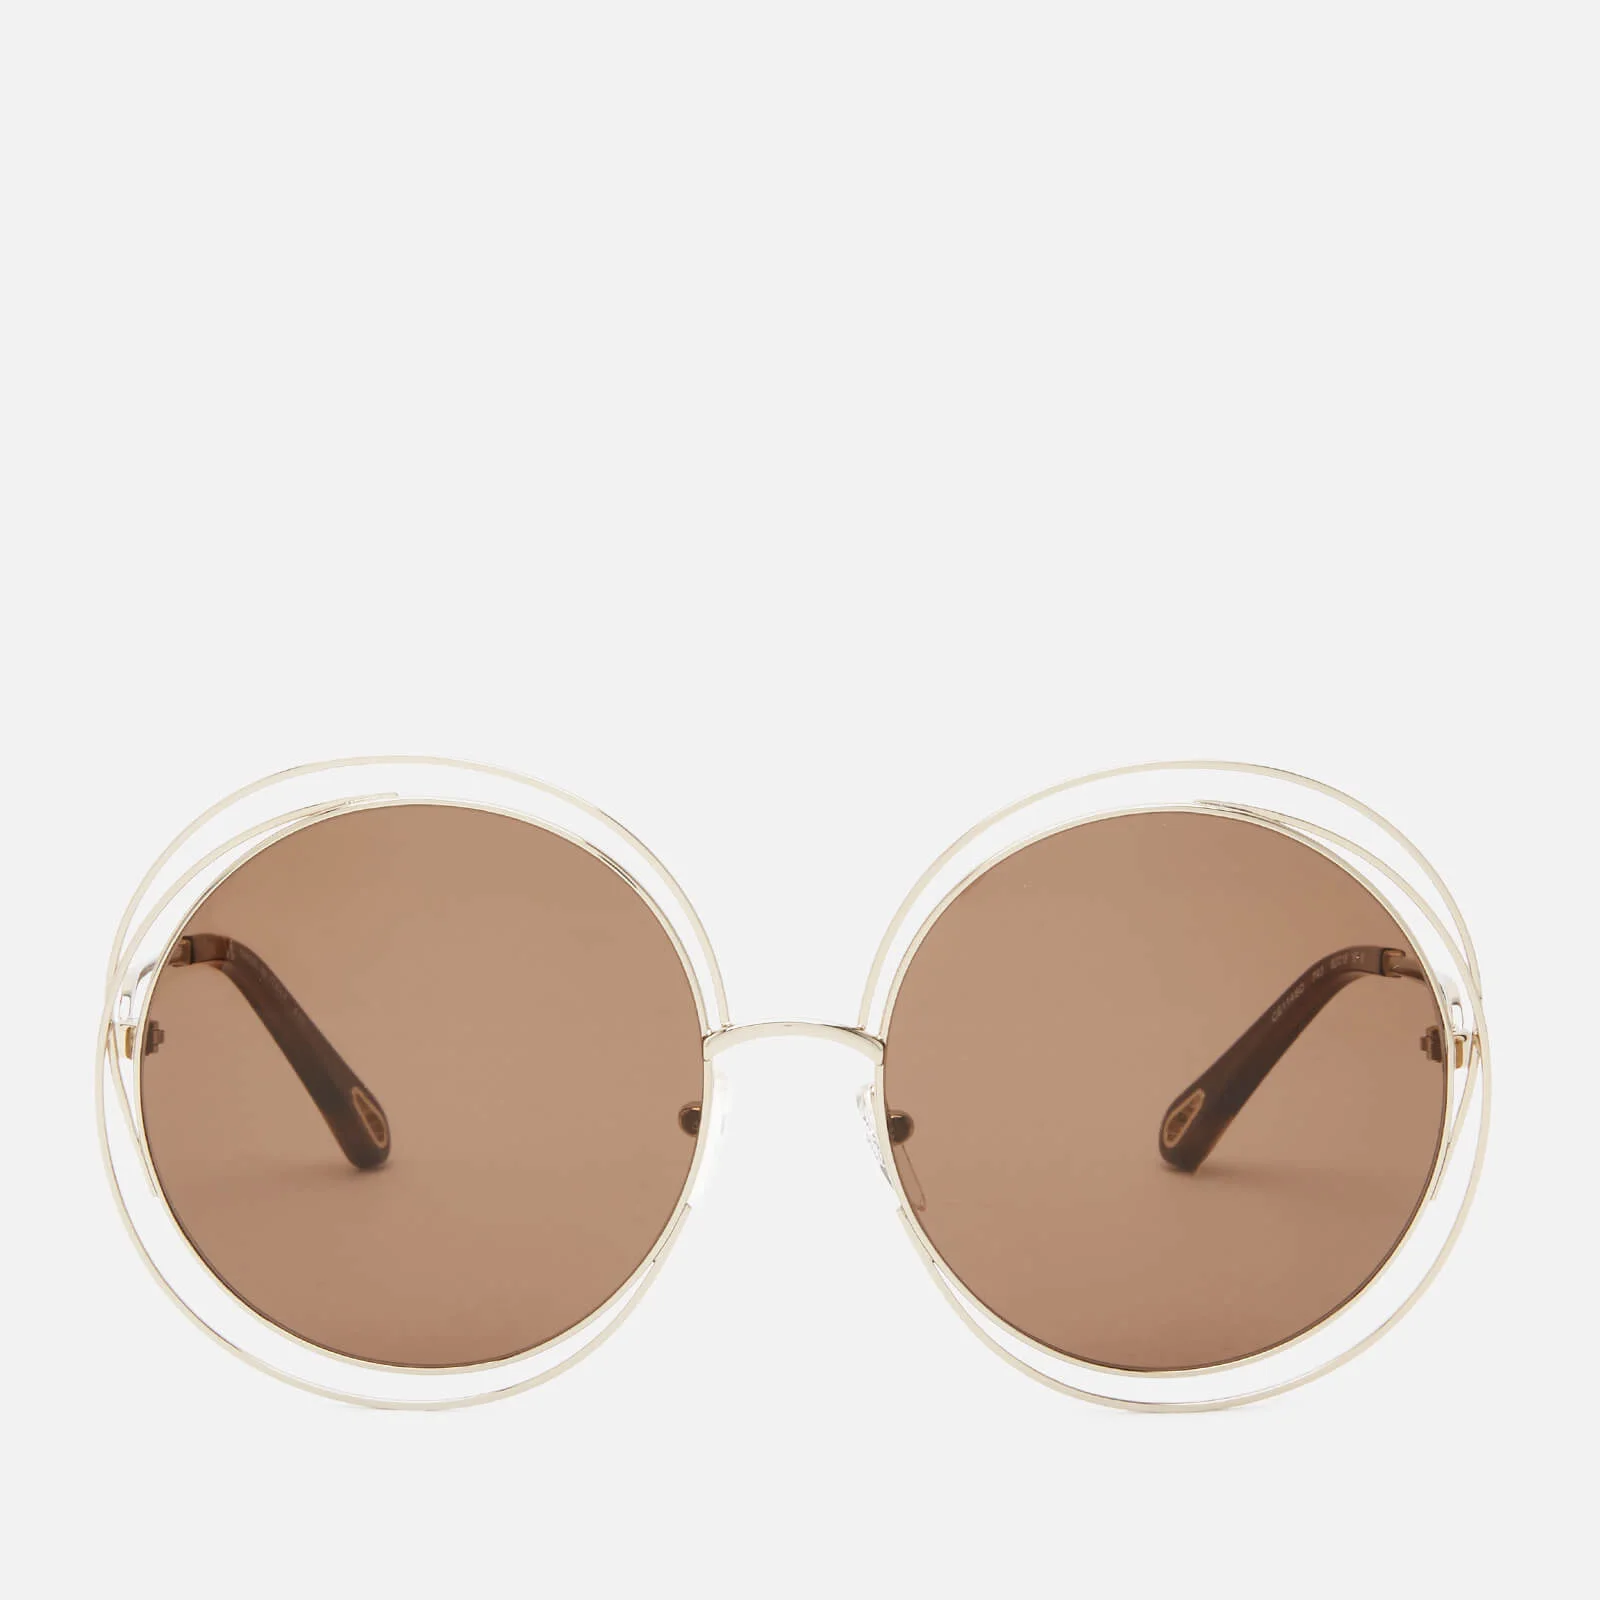 Chloé Women's Carlina Round Frame Sunglasses - Gold/Brown Image 1